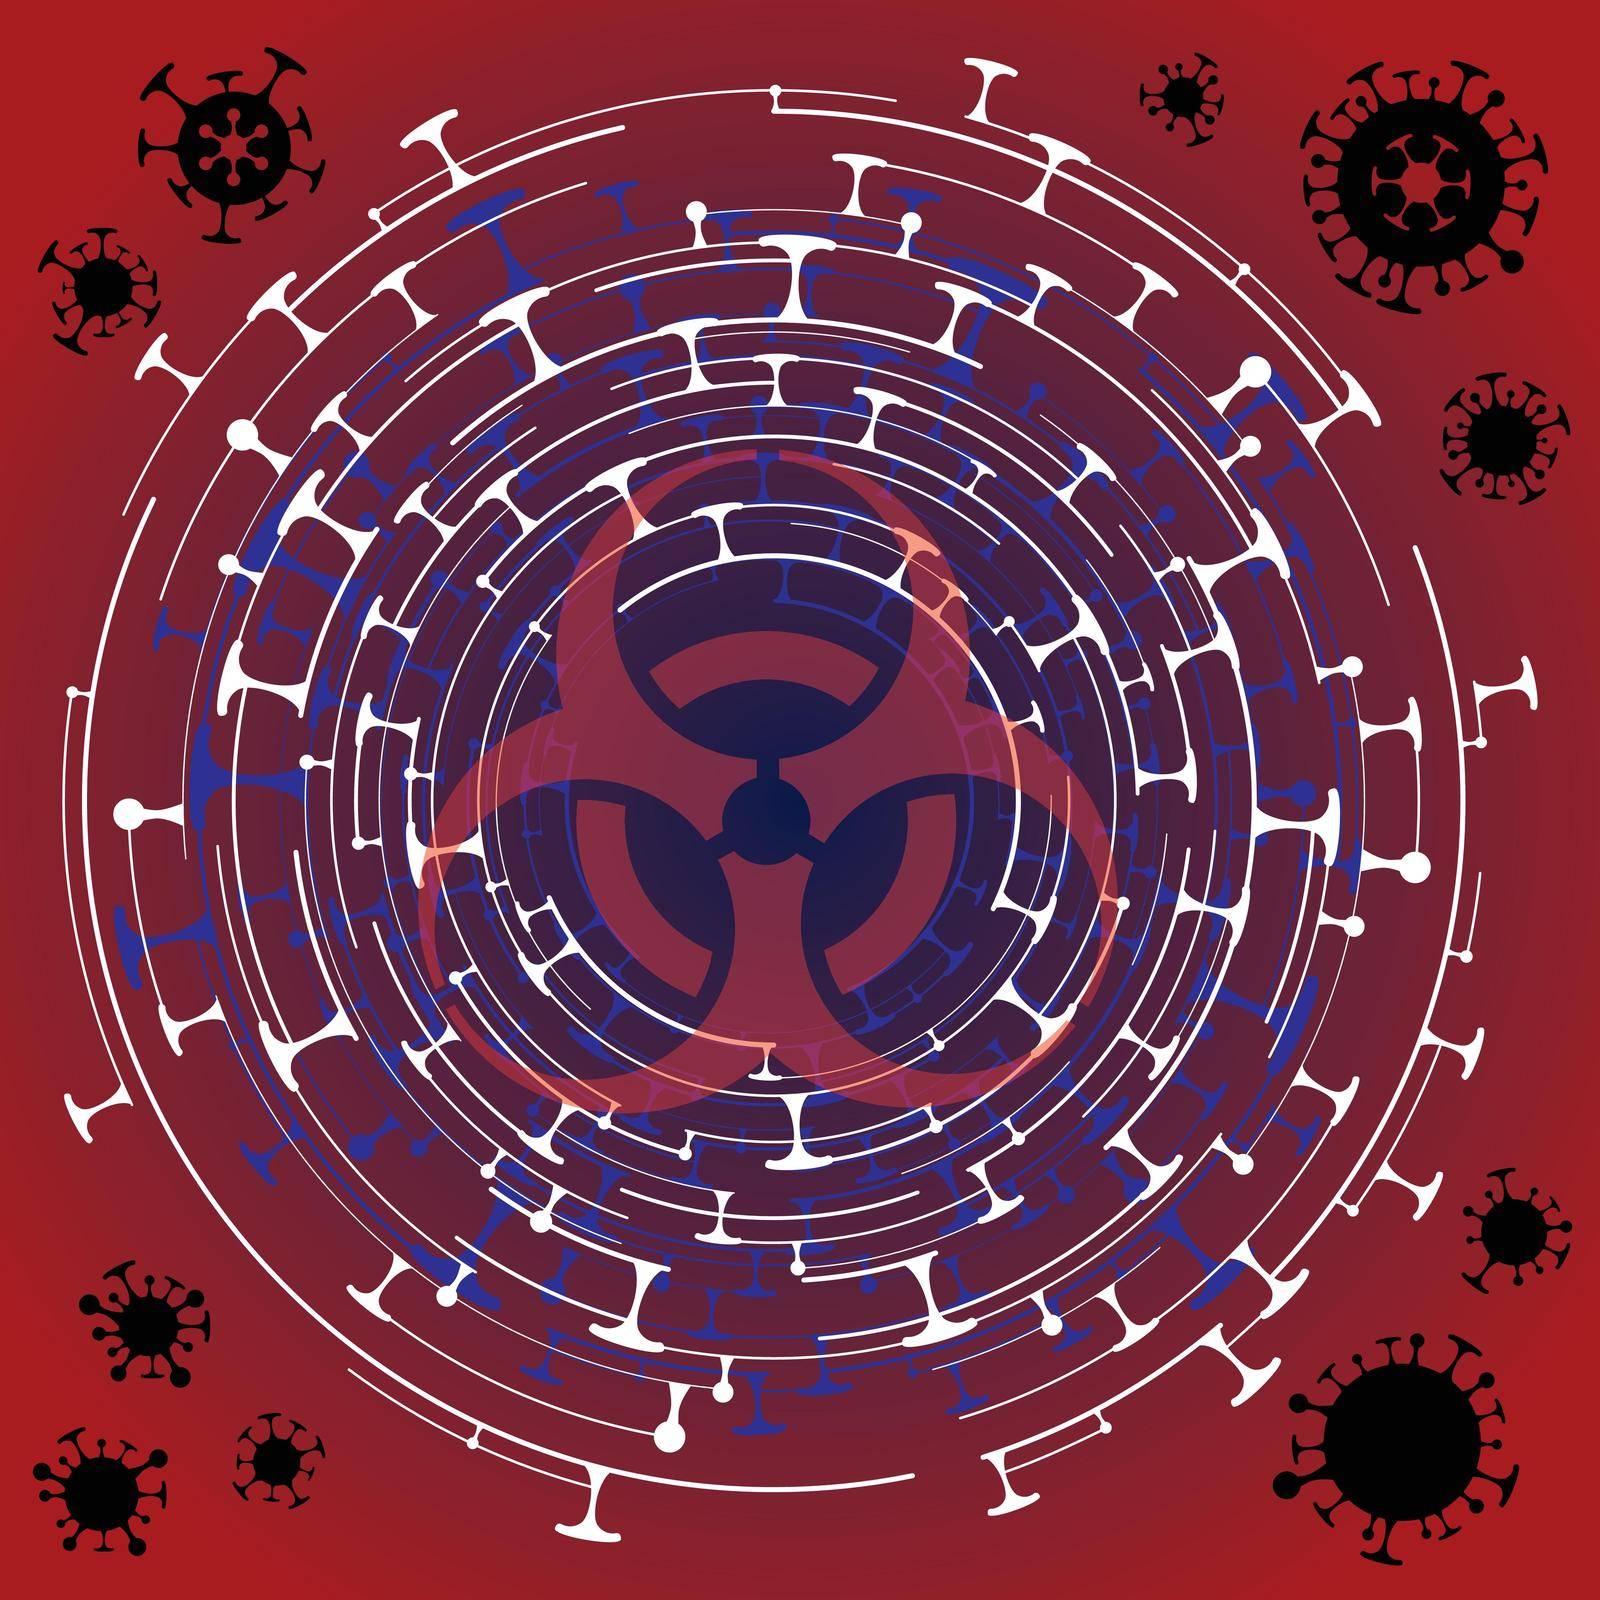 Corona virus biohazard sign on red background by kisika